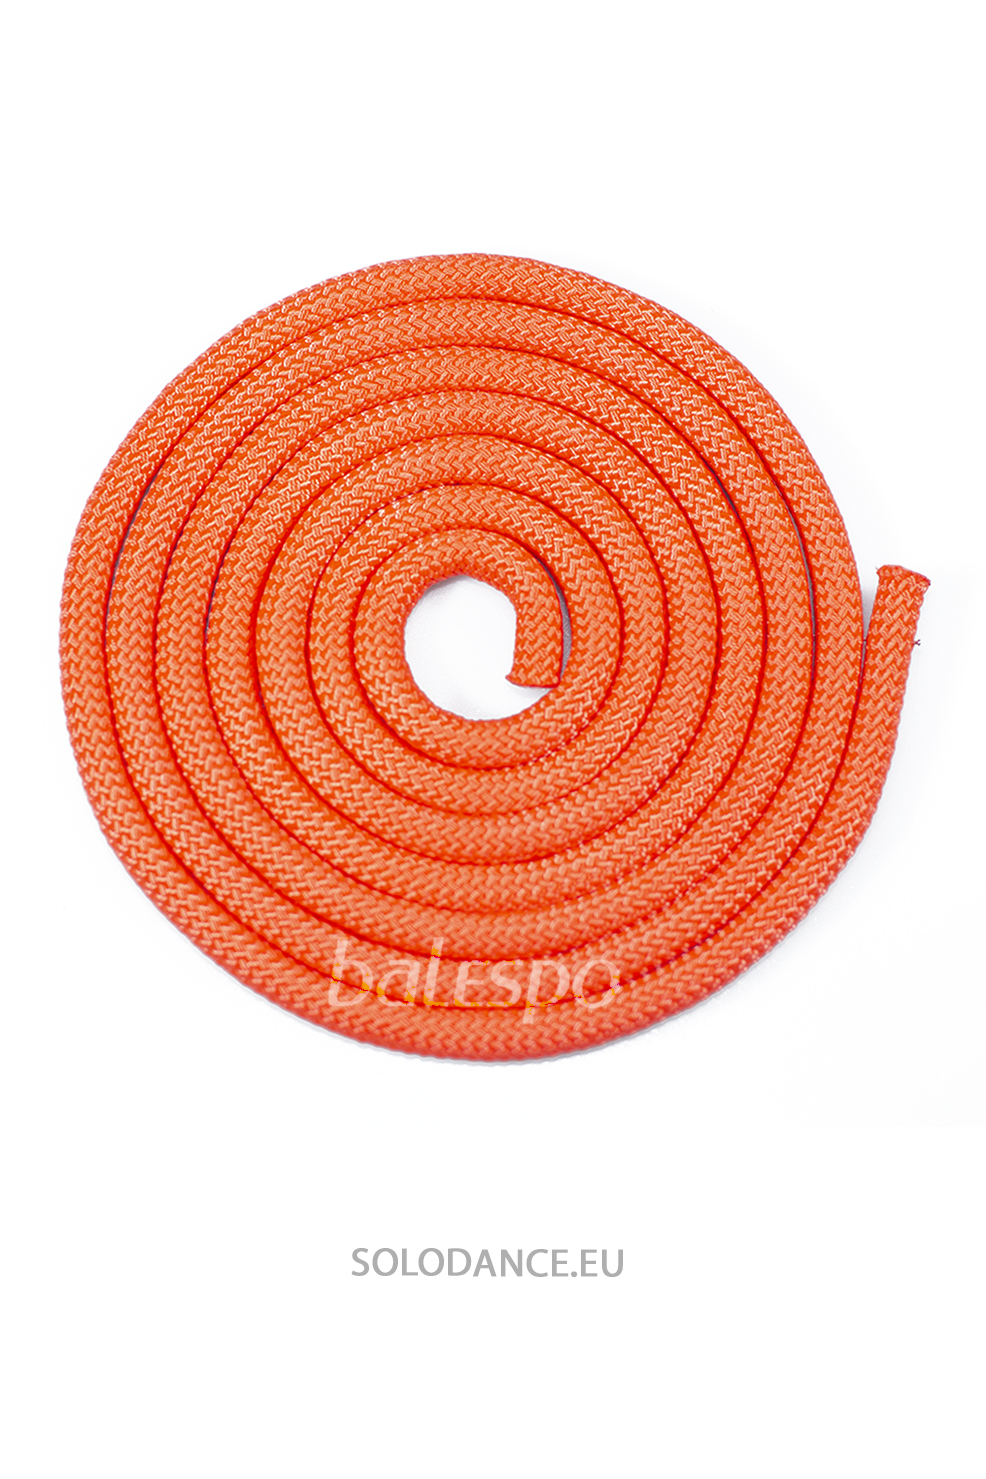 Gymnastic rope BALESPO neon orange 2,5 m 